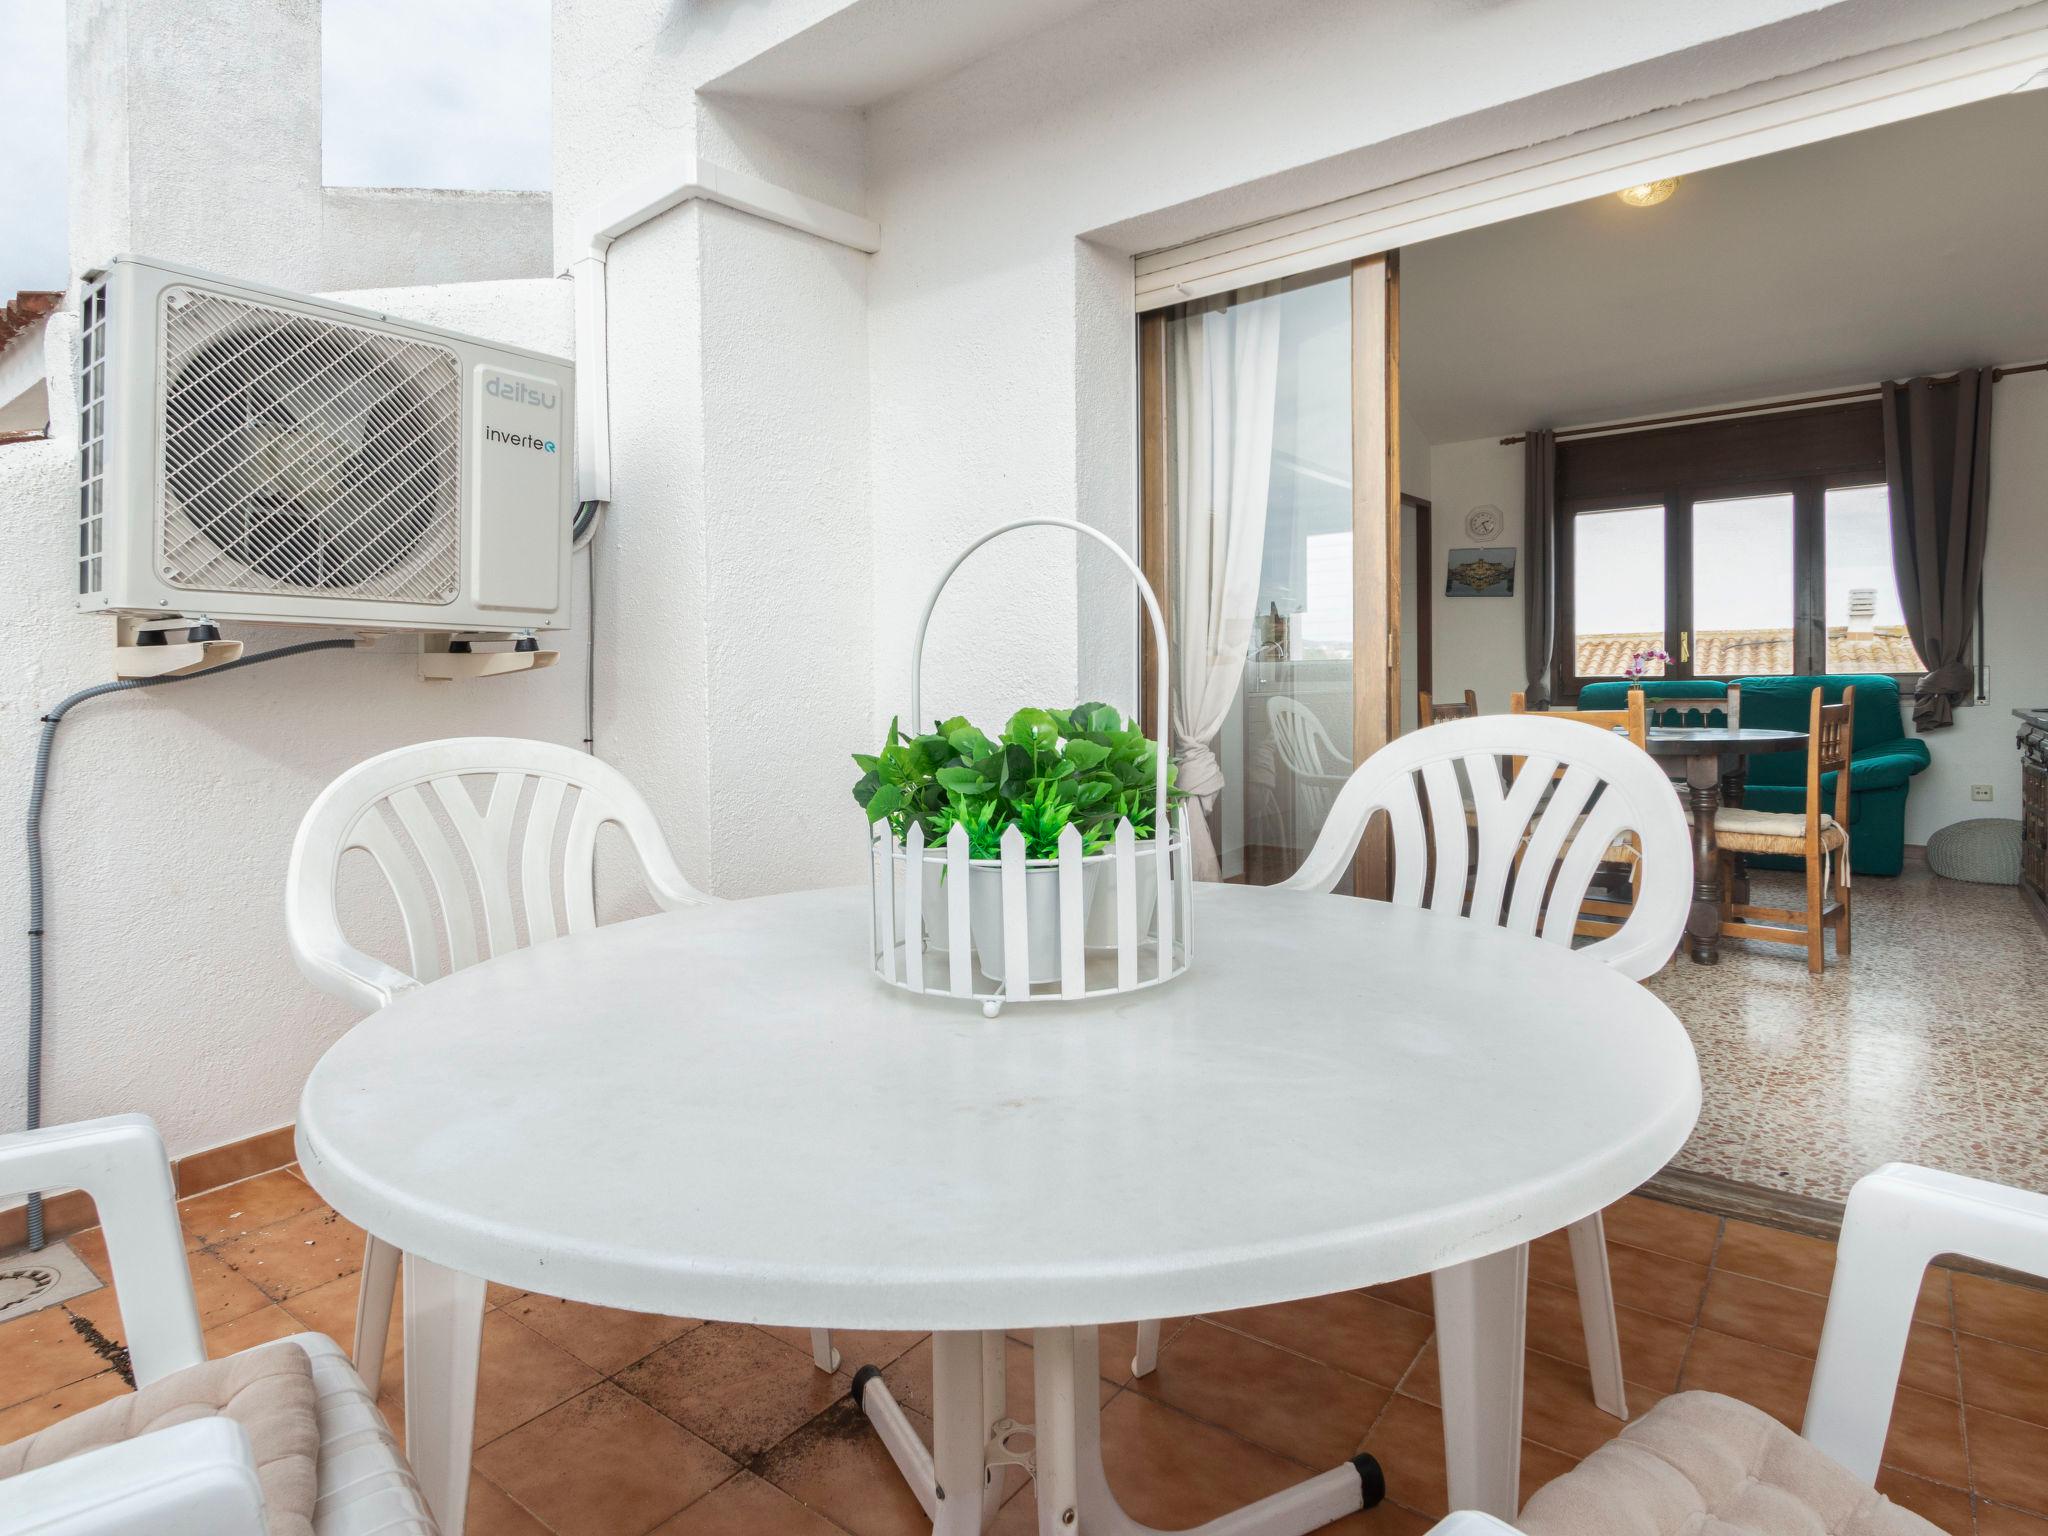 Photo 6 - Appartement de 2 chambres à Torredembarra avec terrasse et vues à la mer